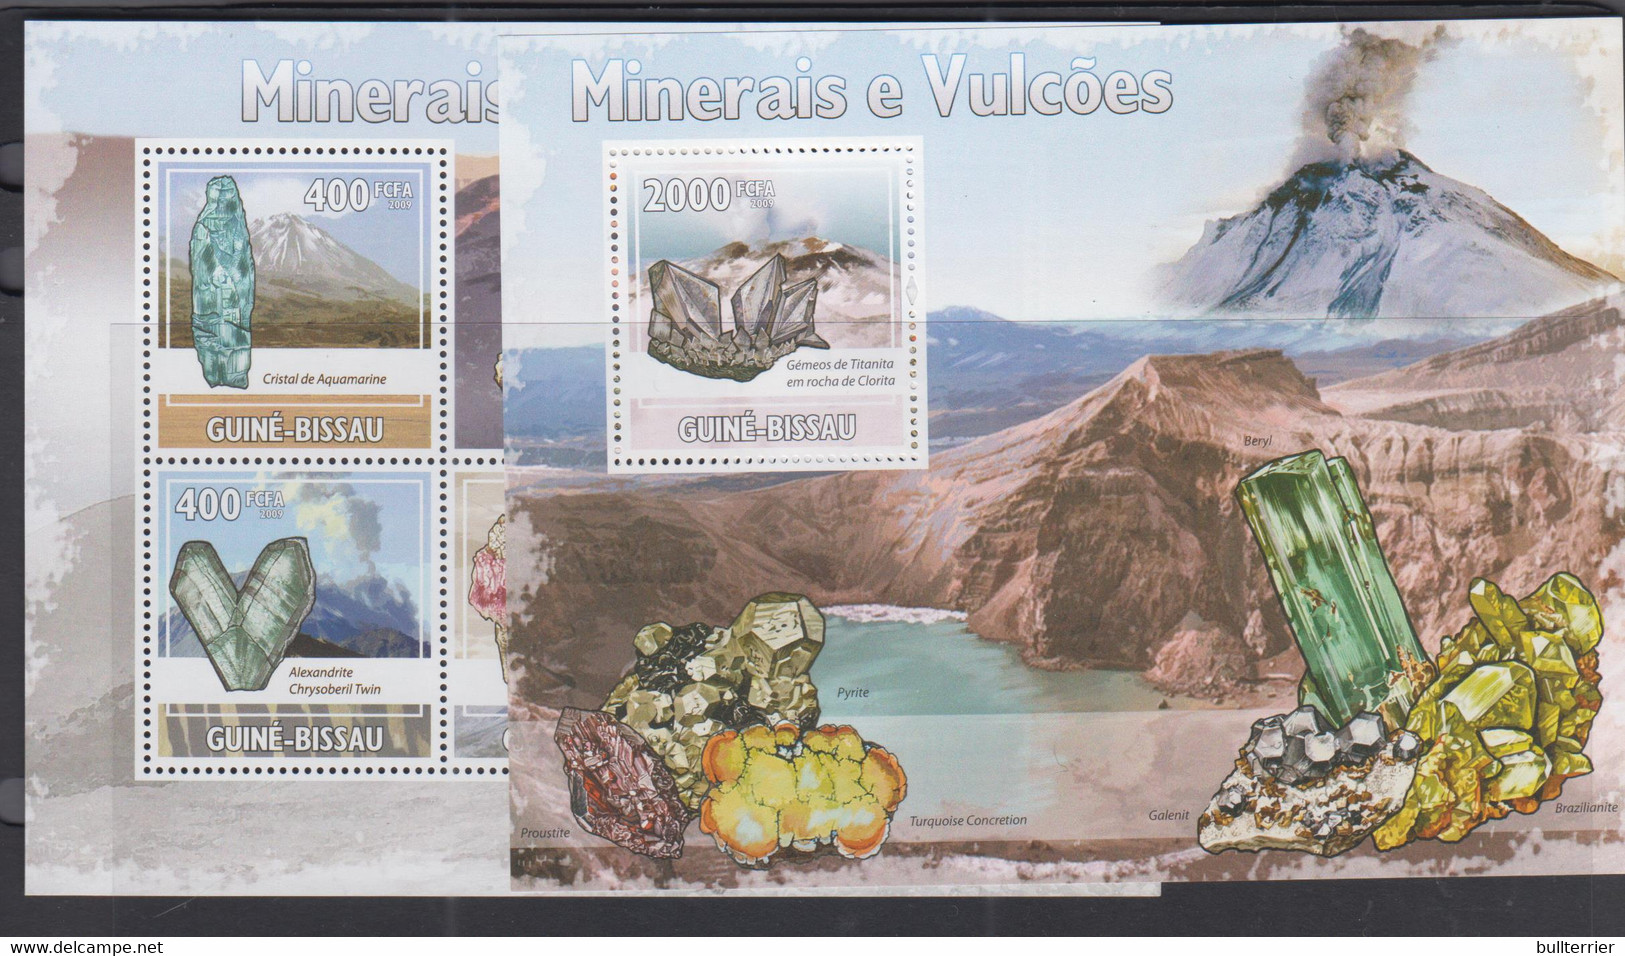 VOLCANOES - GUINEA BISSAU - 2009 - MINERALS & VOLCANOES SHEETLET OF 6 + S/SHEET  MINT NEVER HINGED - Vulcani